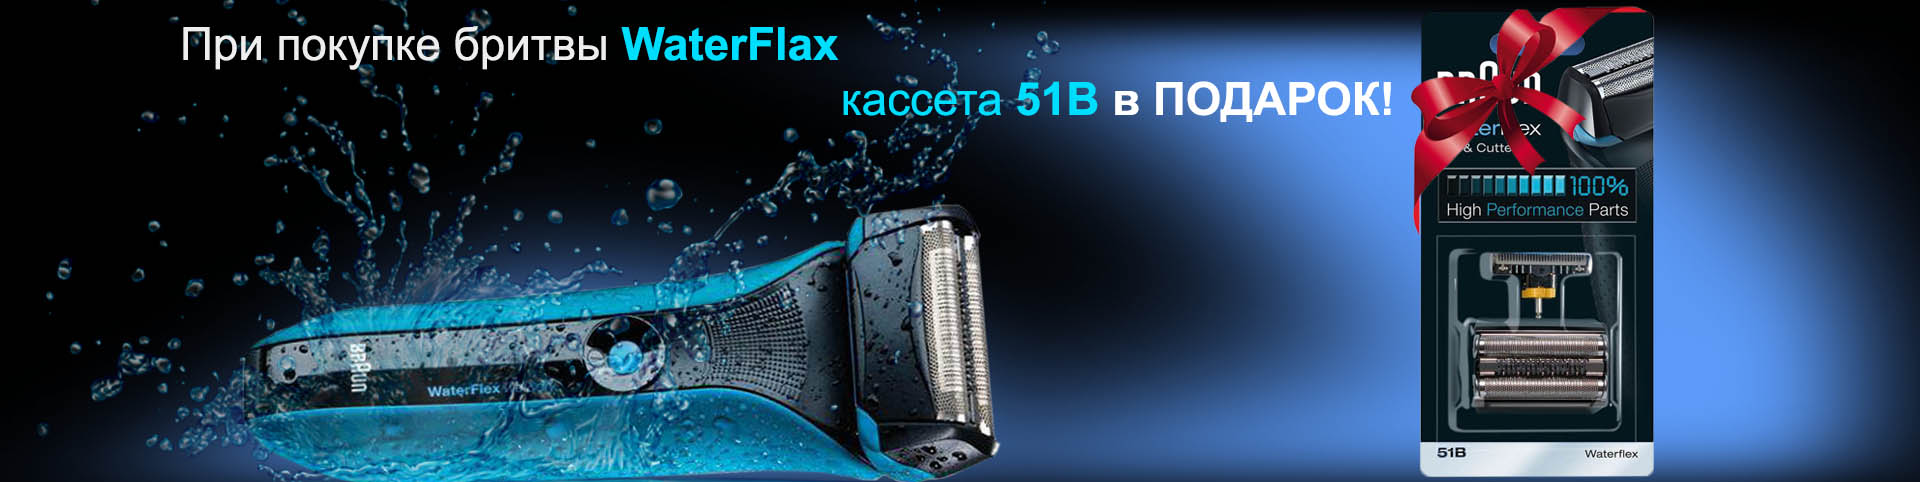 При покупке бритв серии WaterFlex – cетка и режущий блок Braun 51B в подарок!